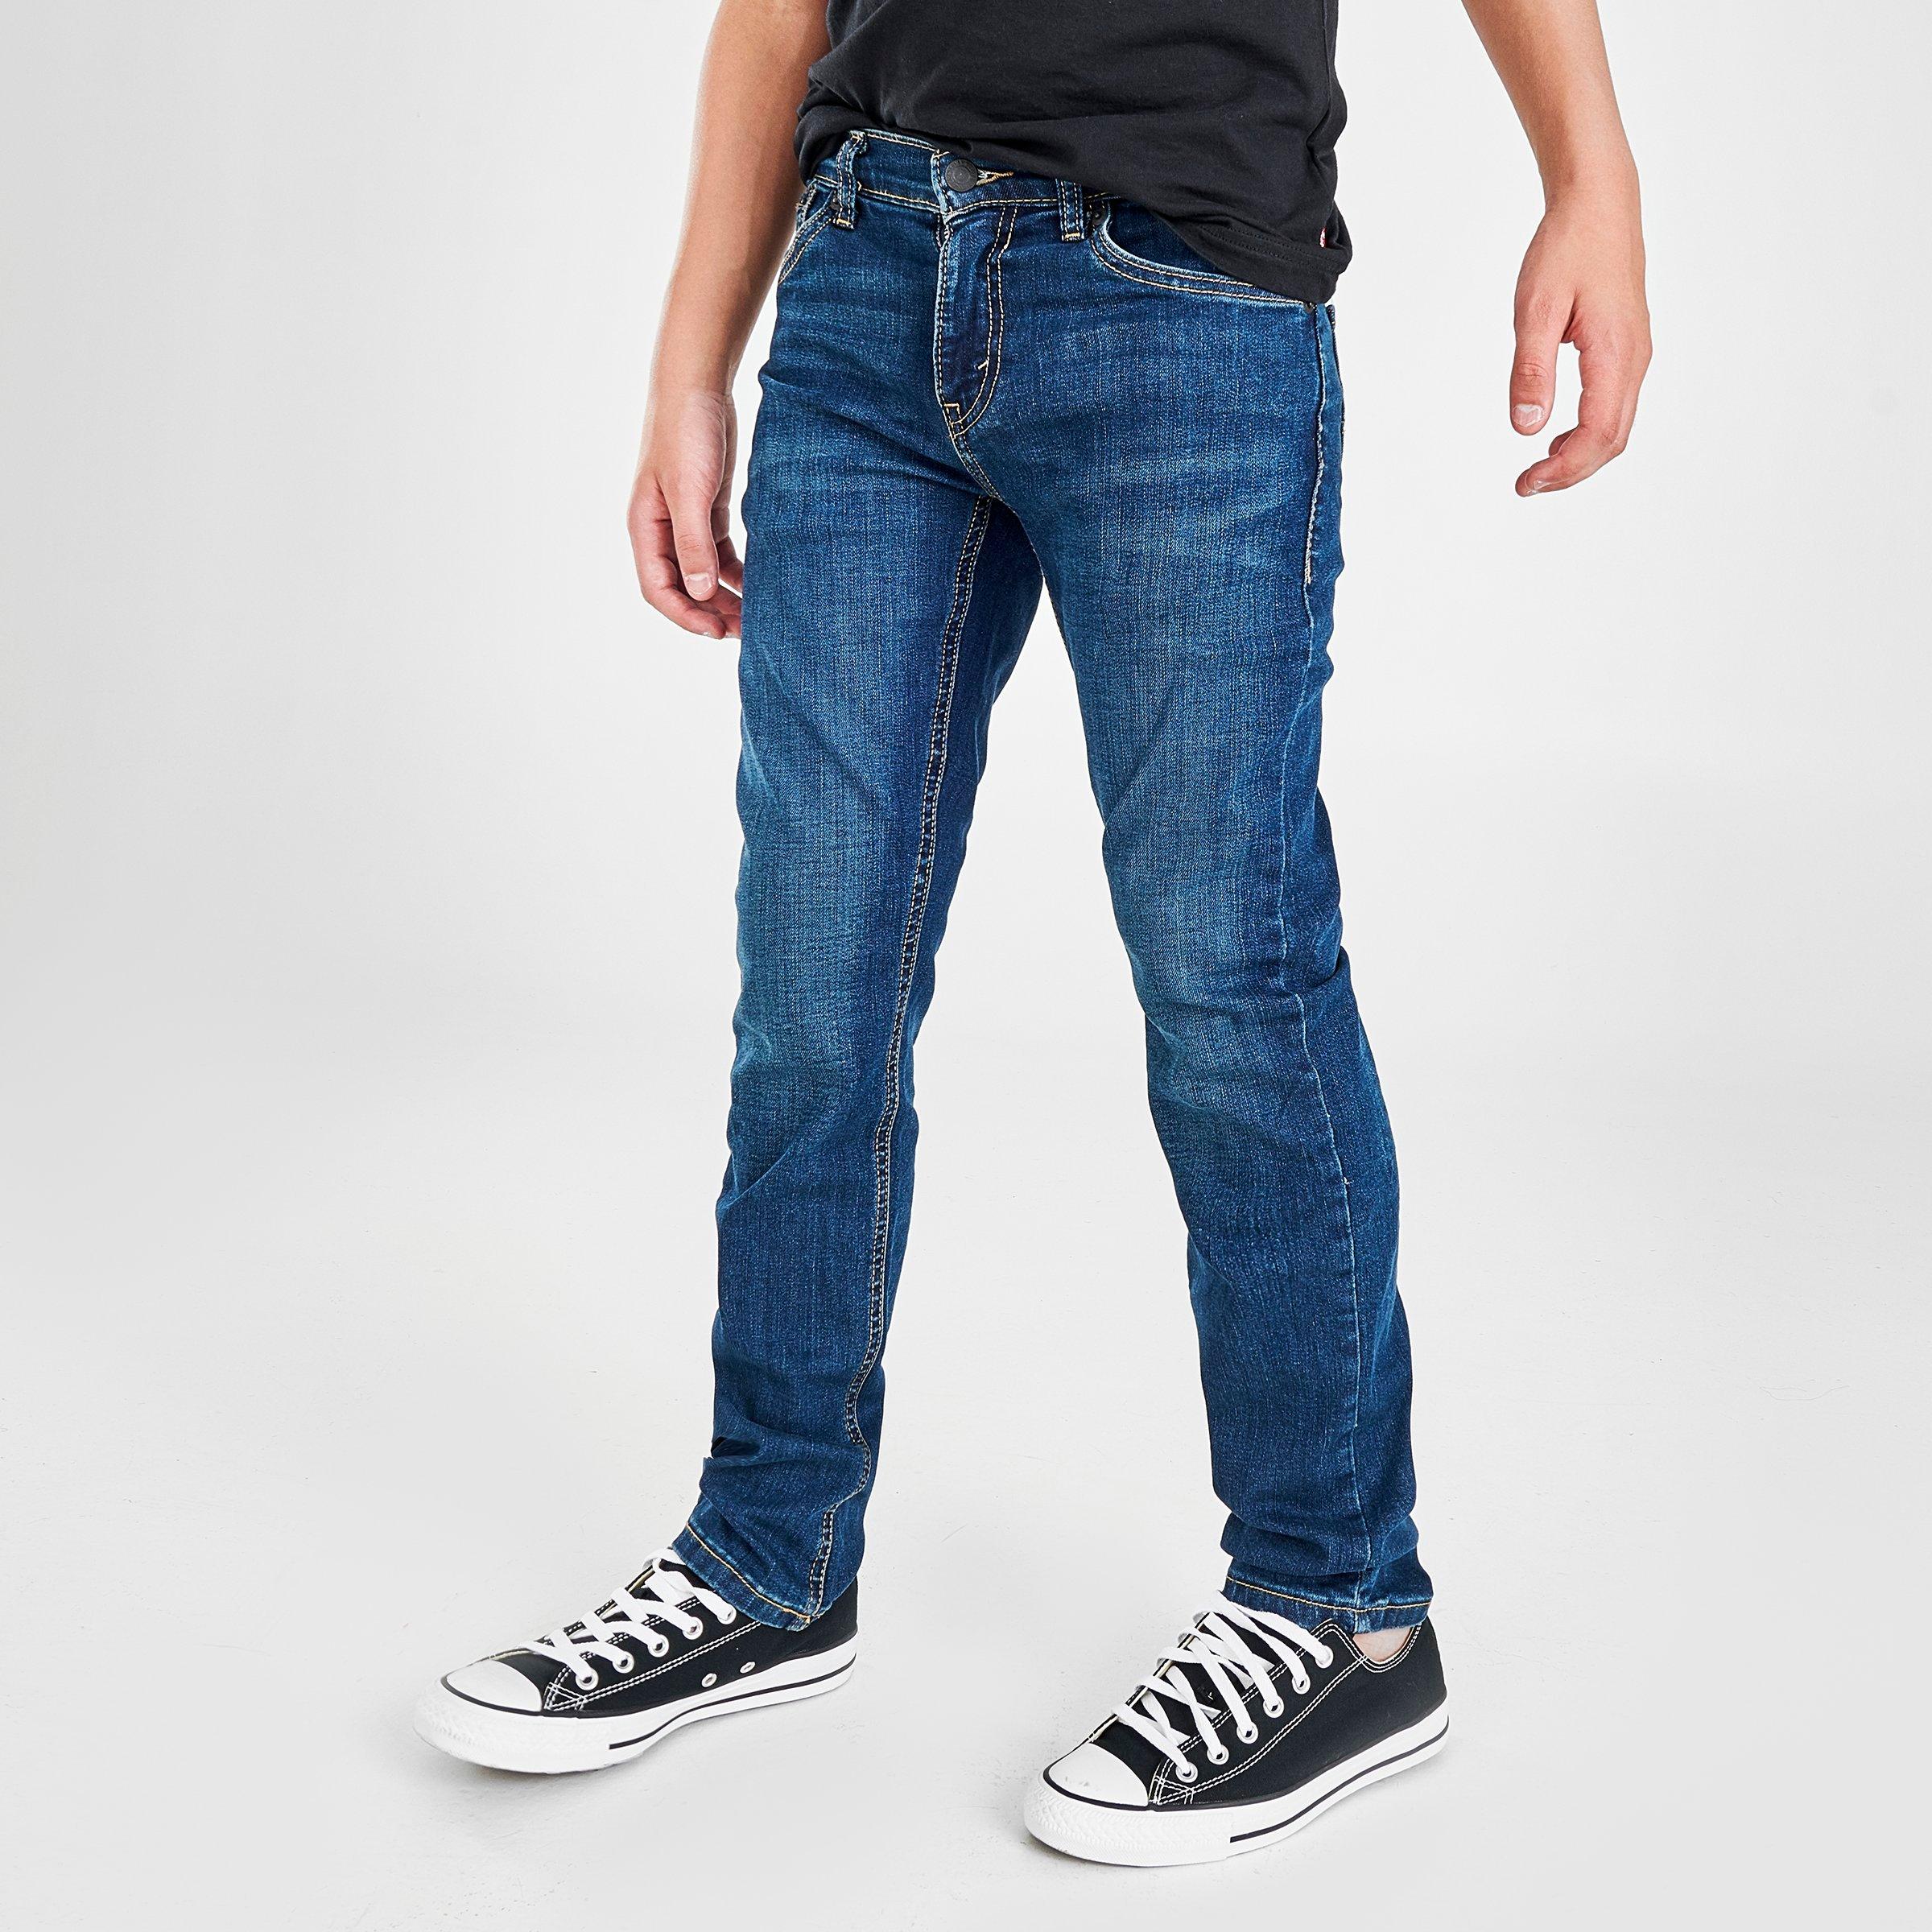 levi's performance jeans